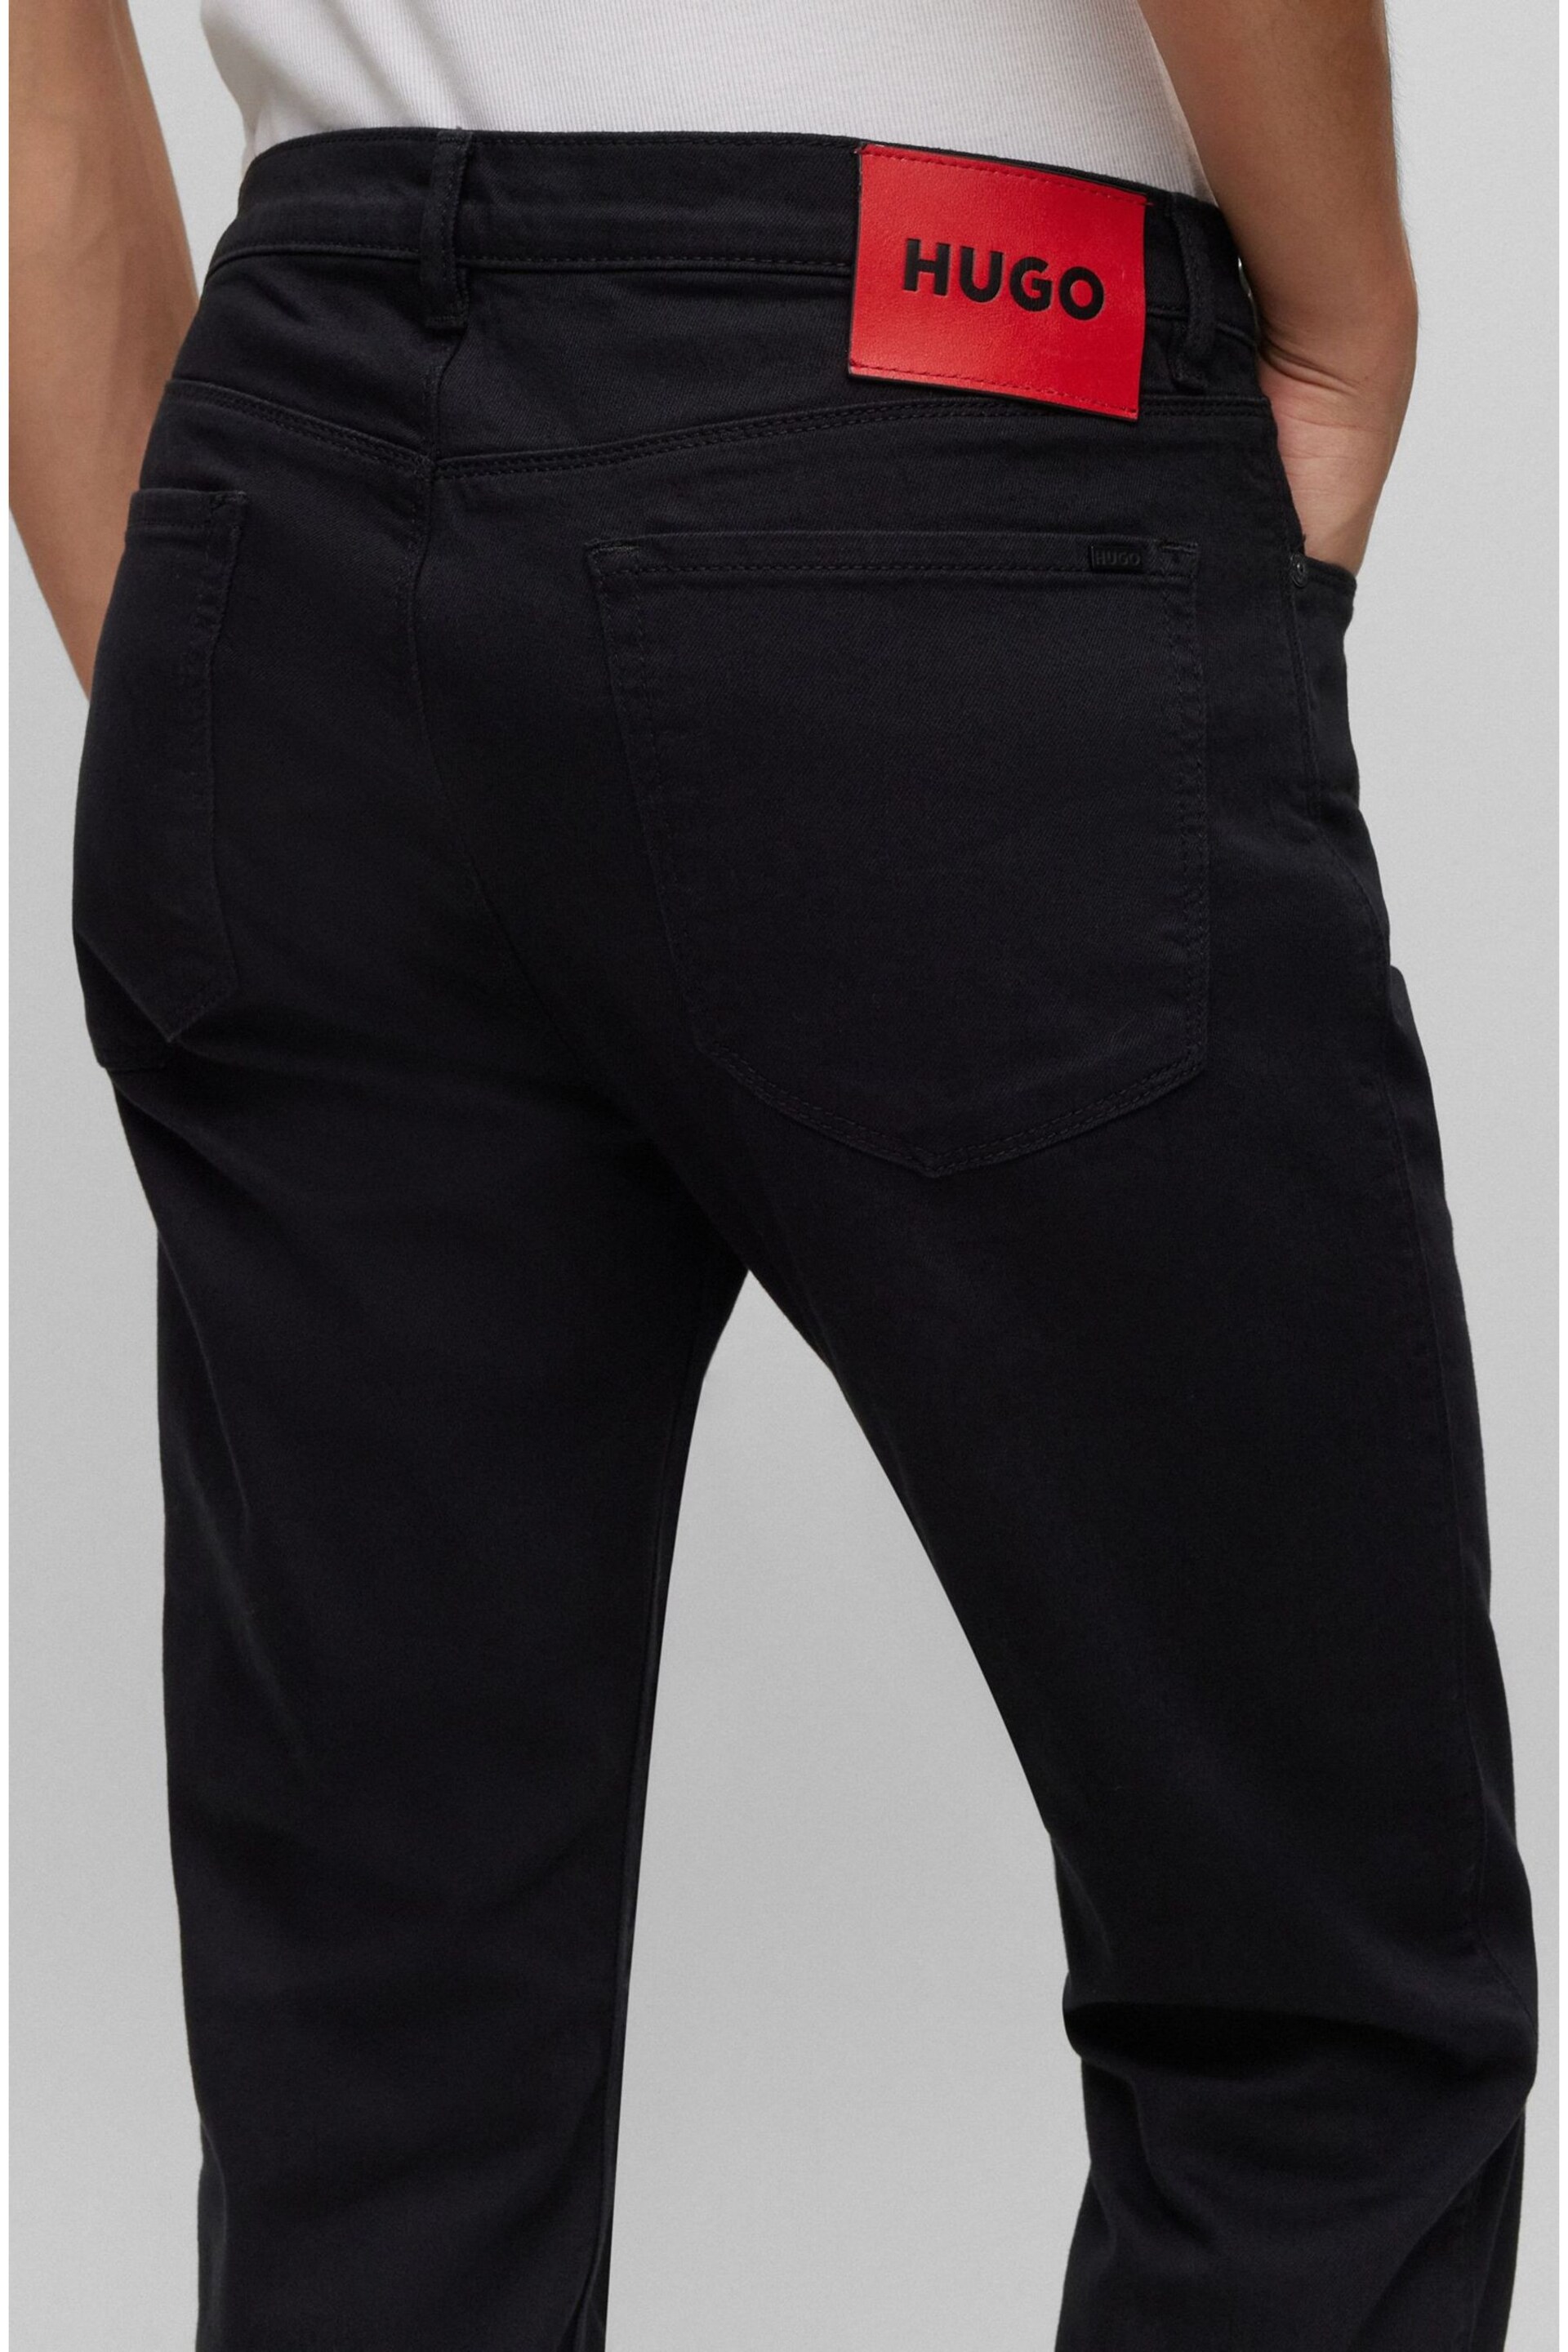 HUGO Slim Fit Comfort Stretch Denim Jeans - Image 7 of 8